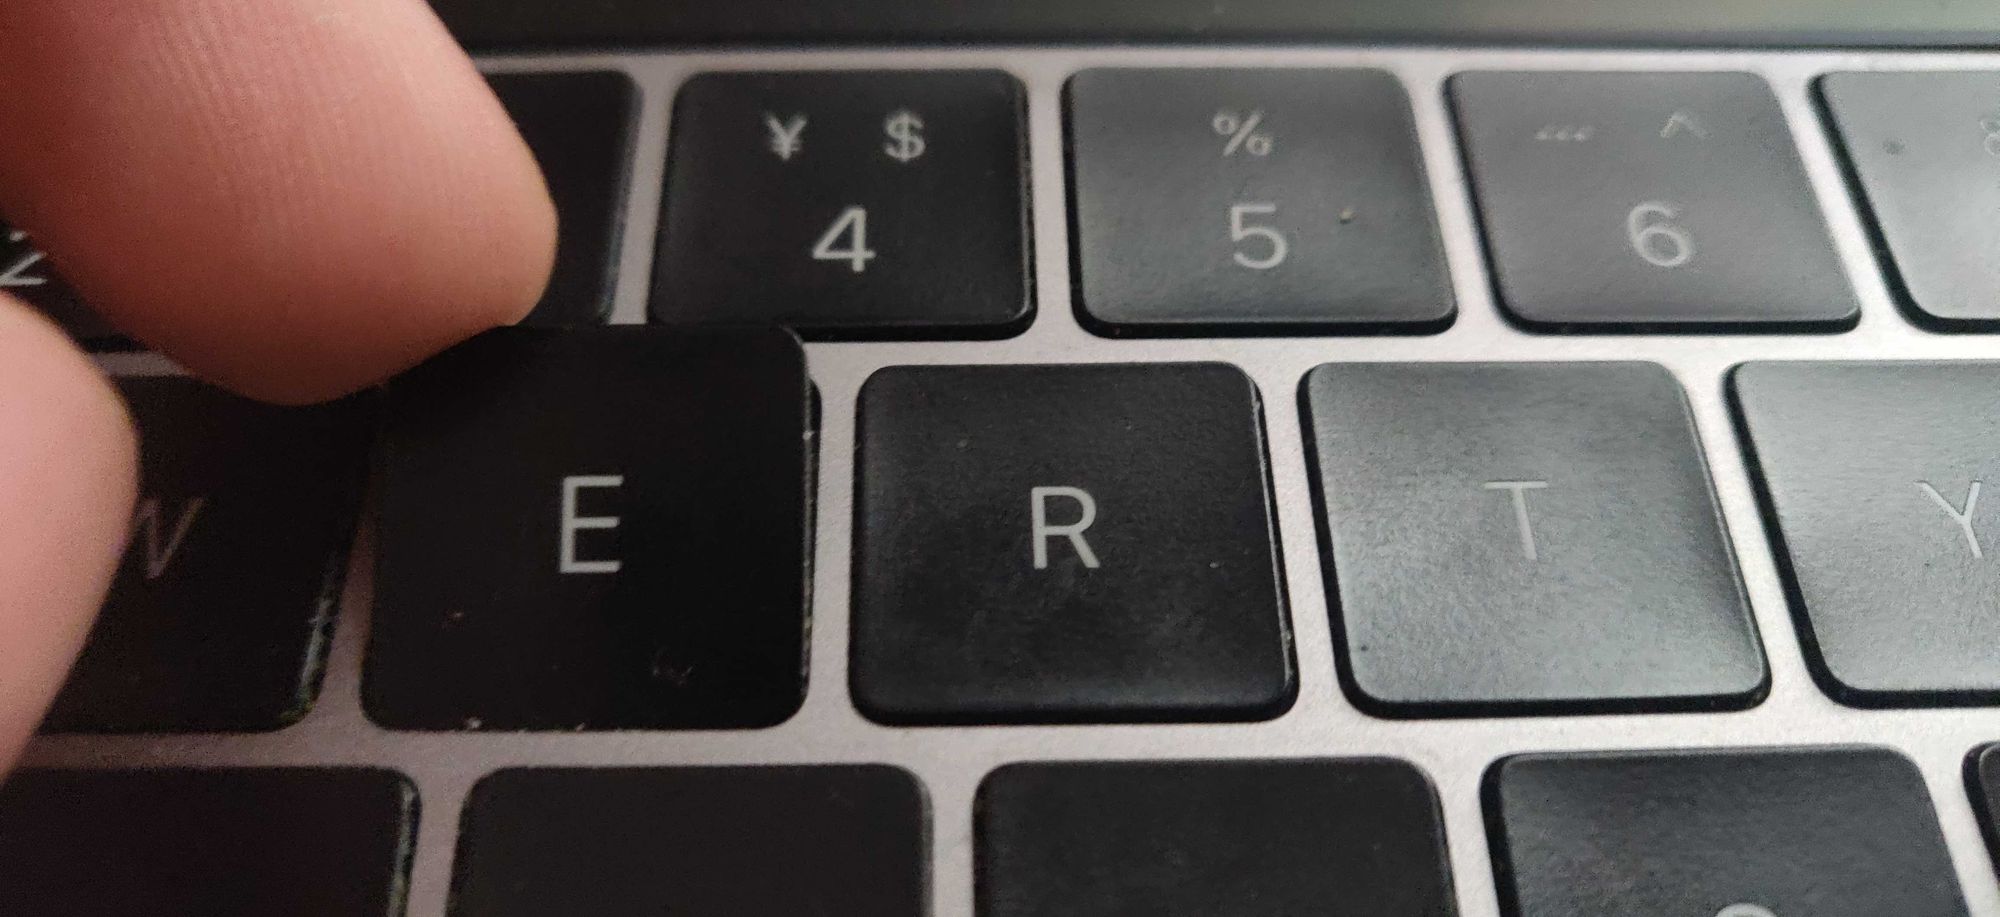 Macbook Pro 2017 垃圾键盘。H, CMD, G, A, E 陆续坏掉（键帽容易断脚）